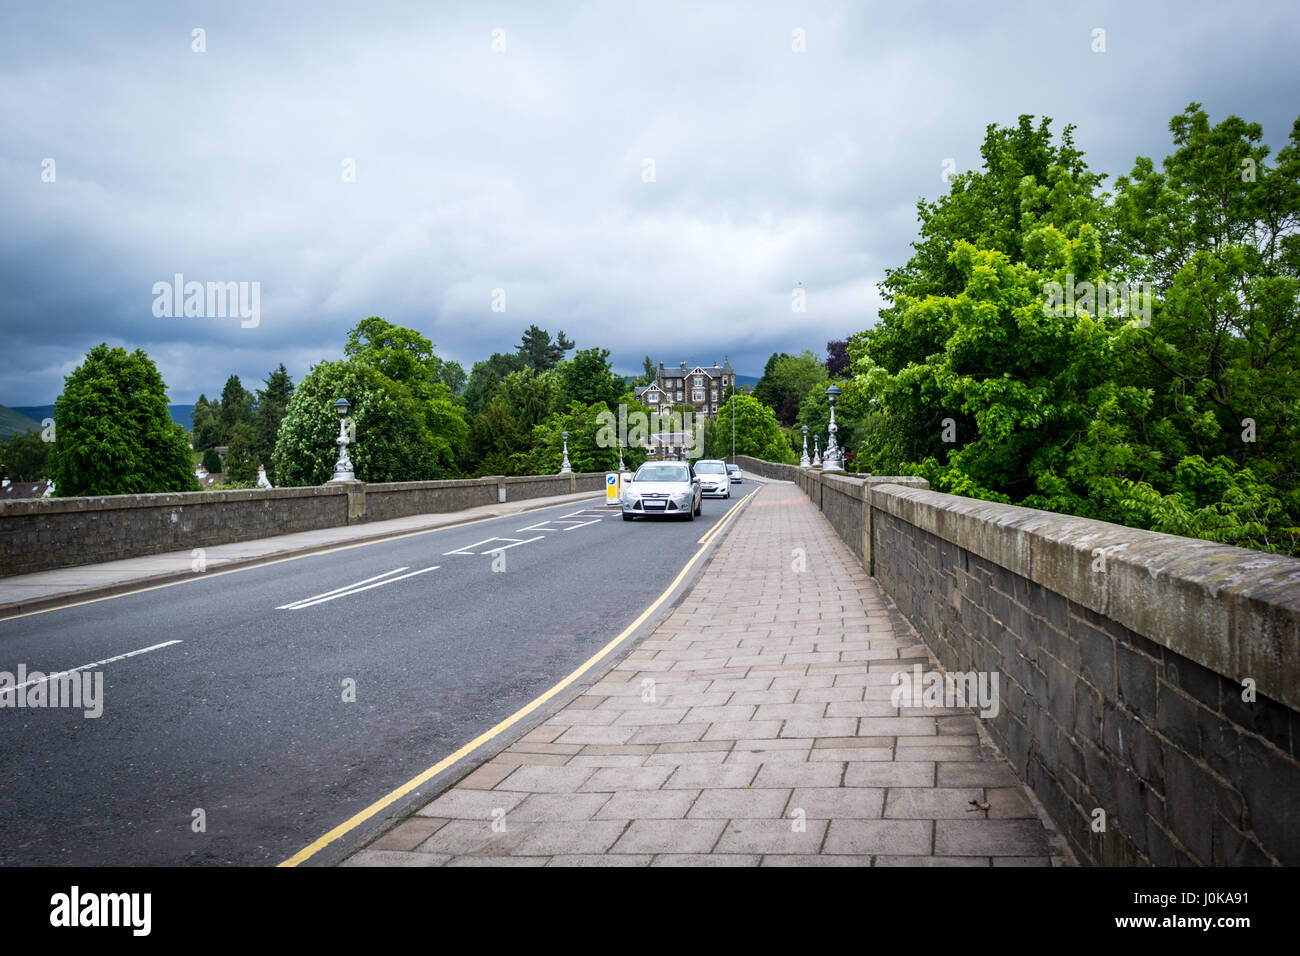 On the town bridge in Peebles, Scotland Stock Photo